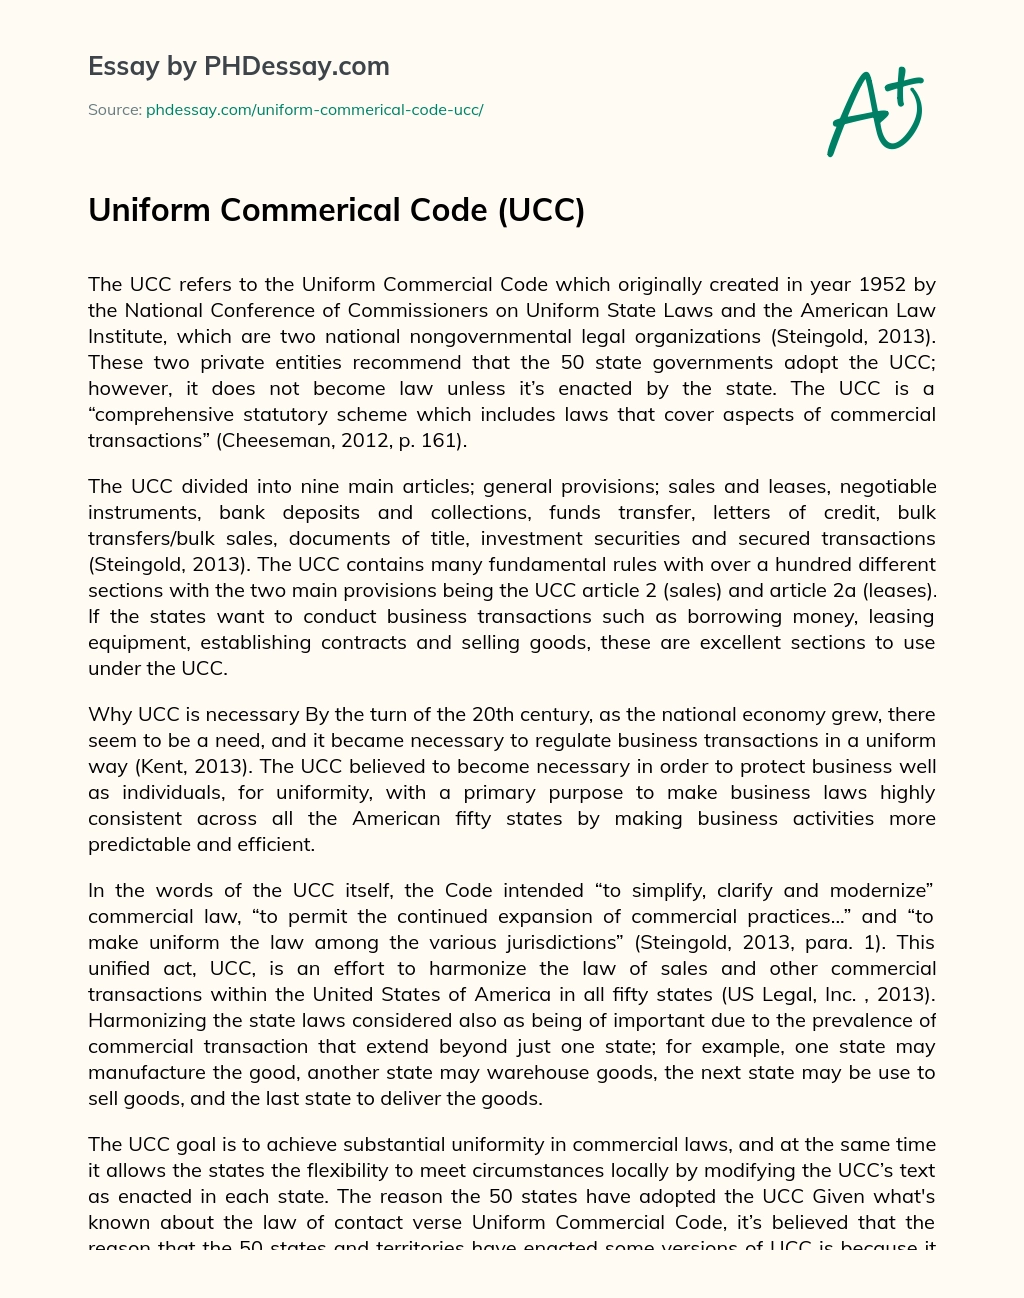 Uniform Commerical Code (UCC) essay